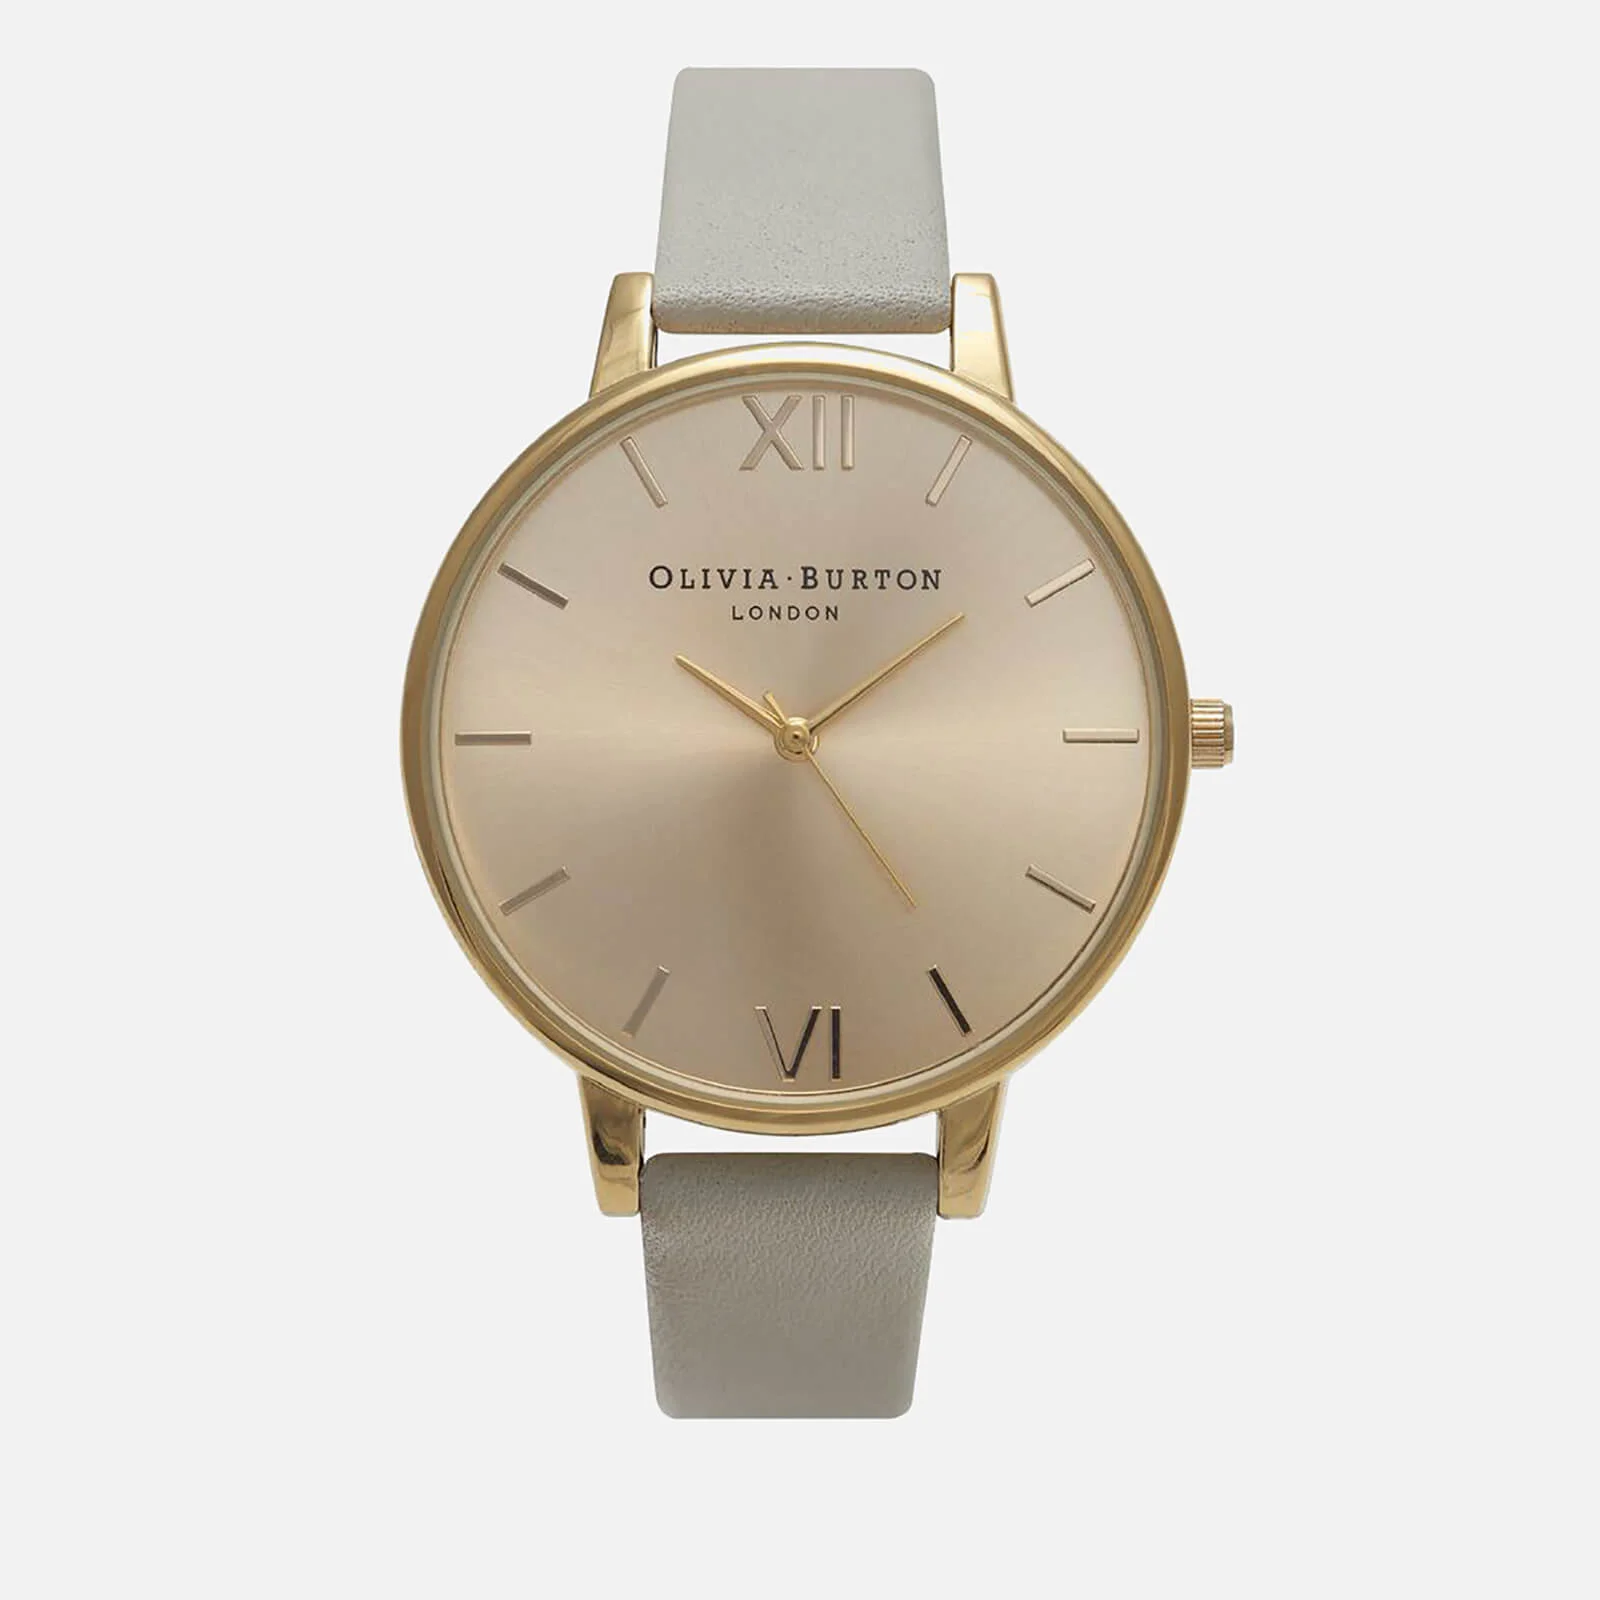 Olivia Burton Women's Big Dial Watch - Grey/Gold Image 1